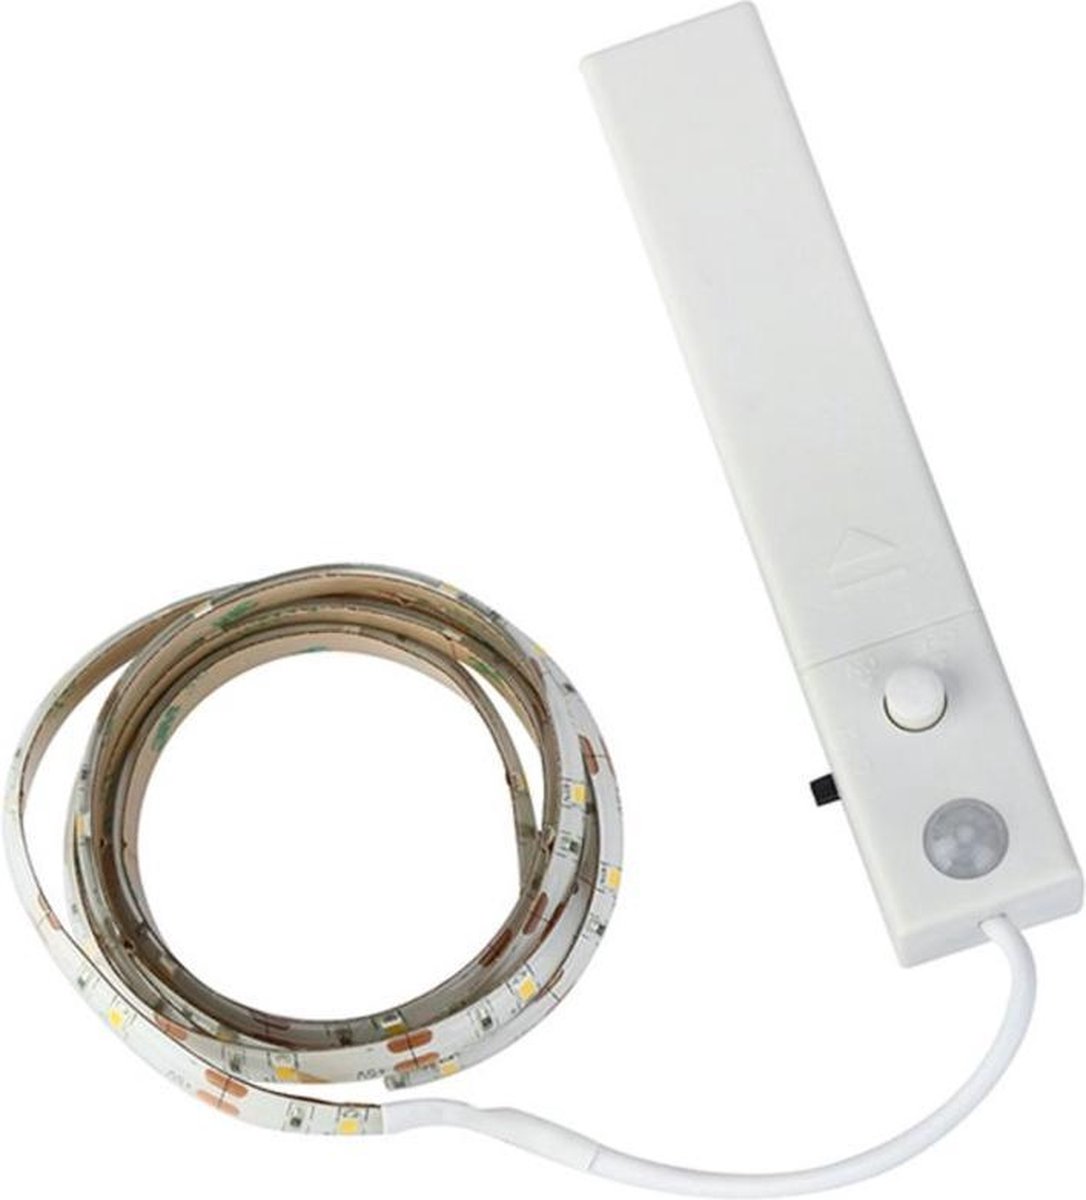 Ledstrip met sensor - 30 ledlampjes | LED STRIP 1m | Bewegingssensor |  bol.com